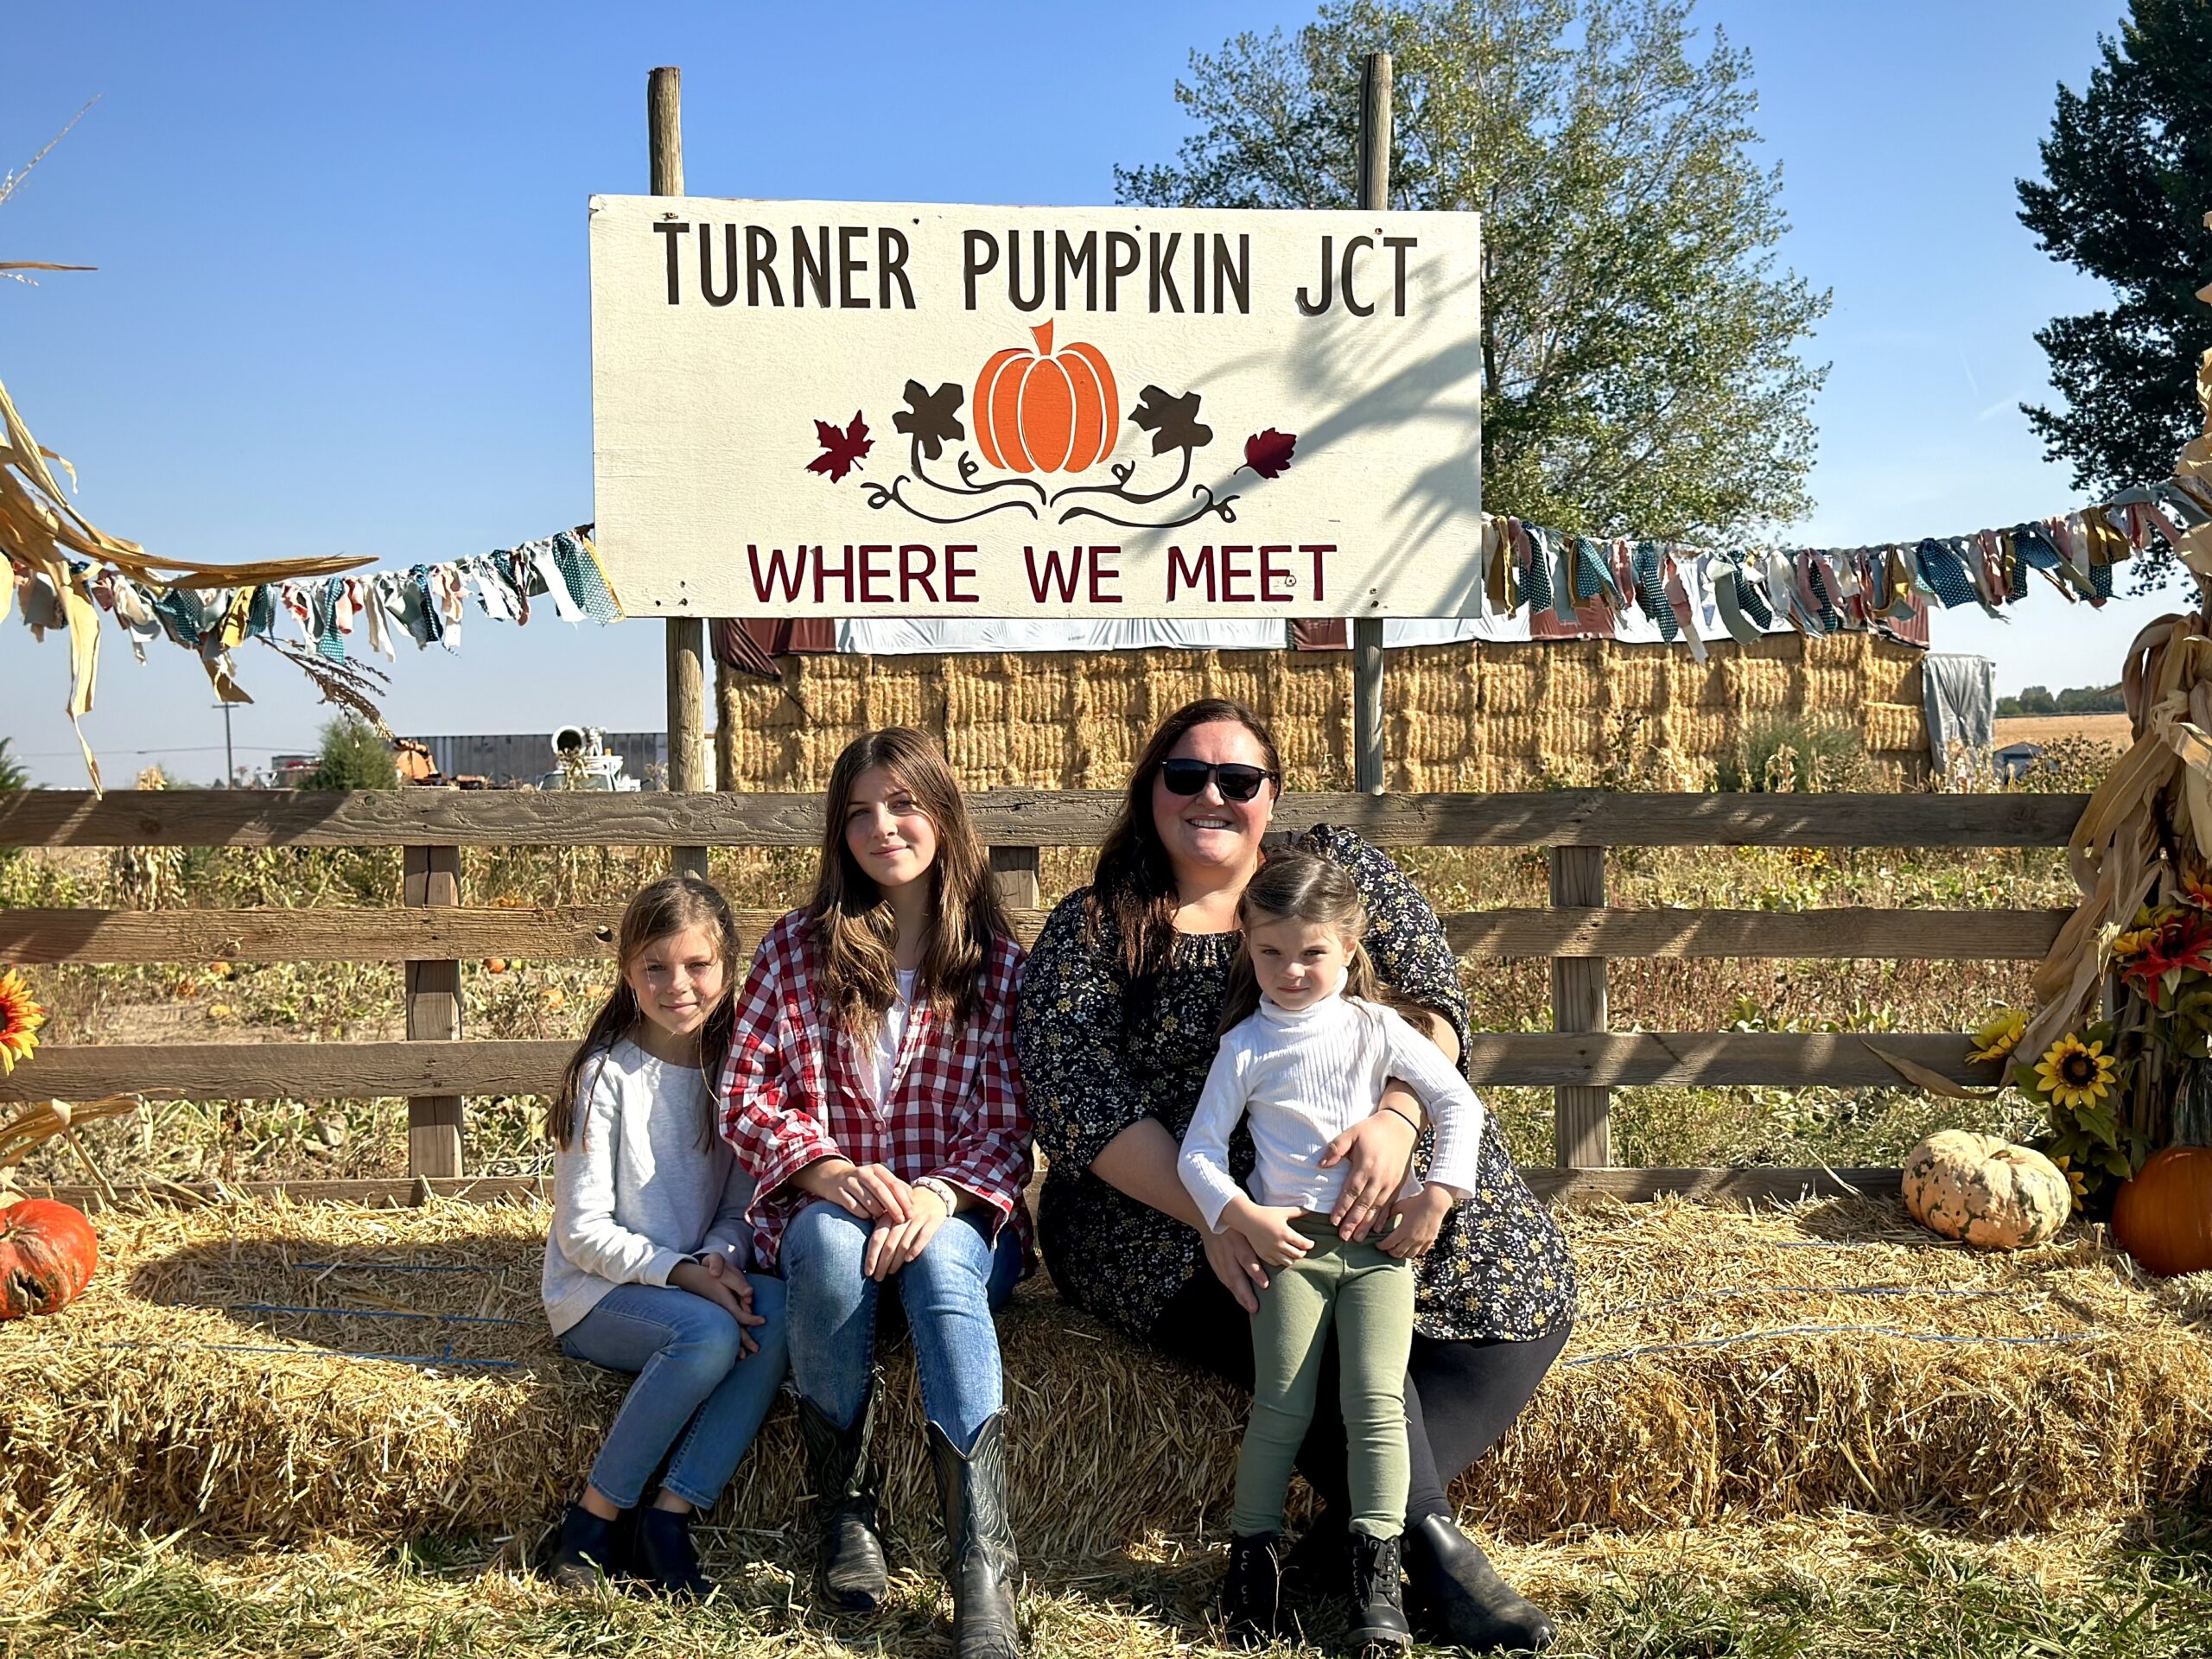 Turner pumpkin junction -102